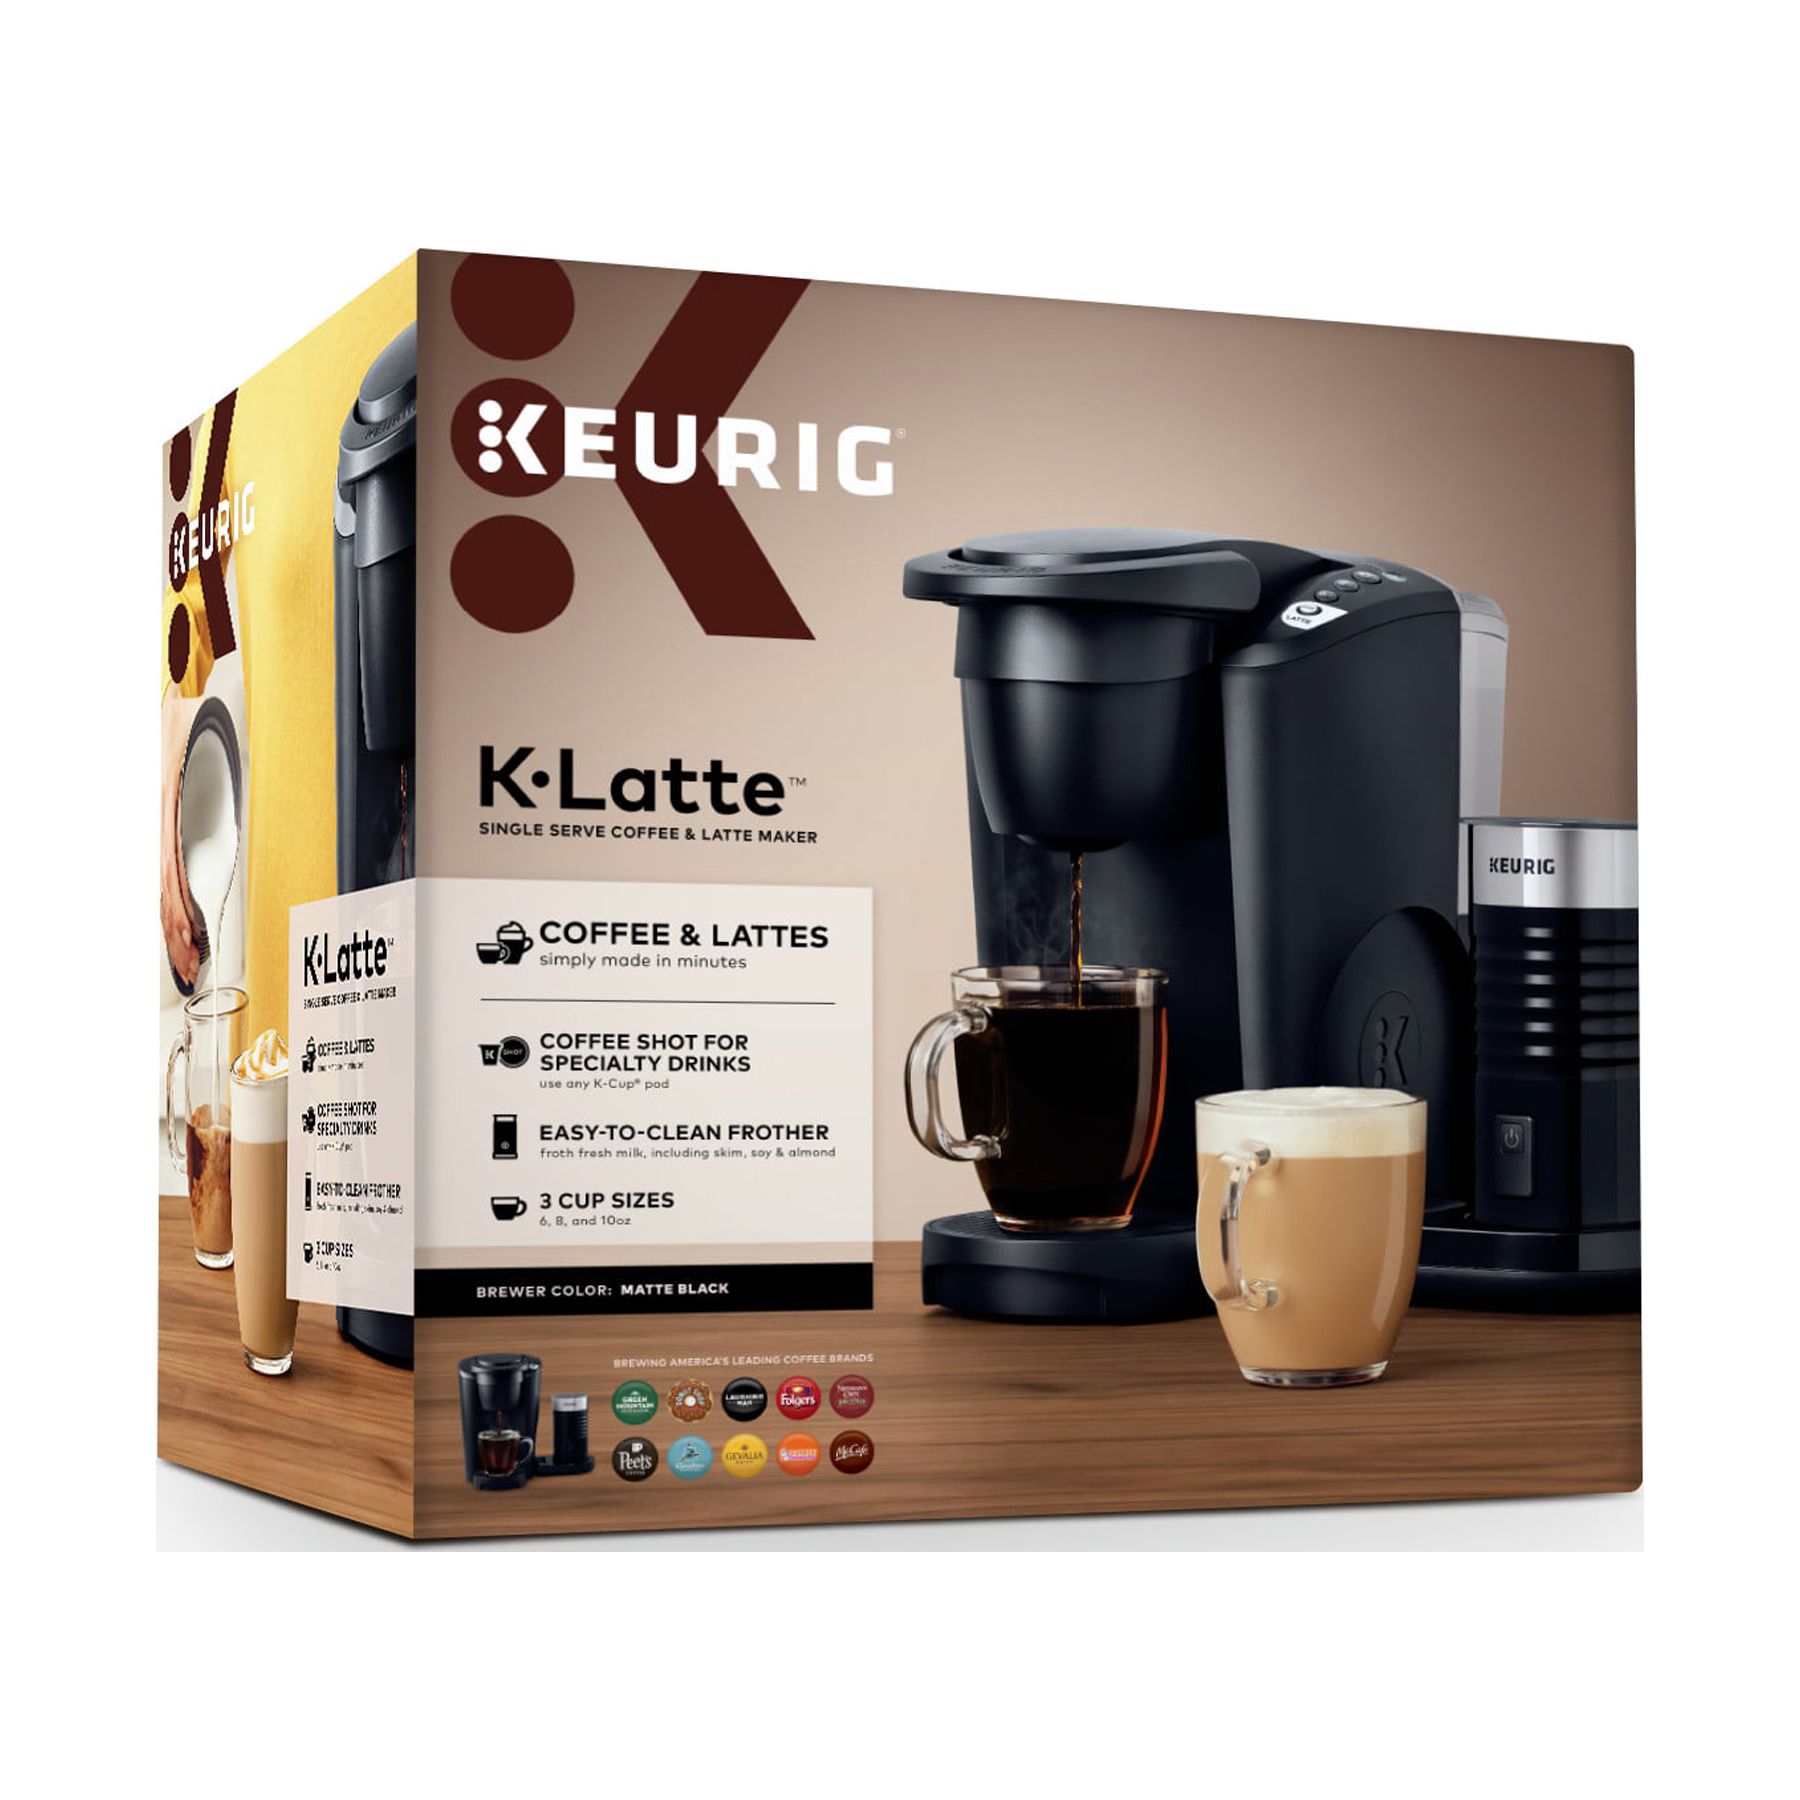 Keurig K-Latte Single Serve K-Cup Coffee and Latte Maker, Black - image 12 of 12